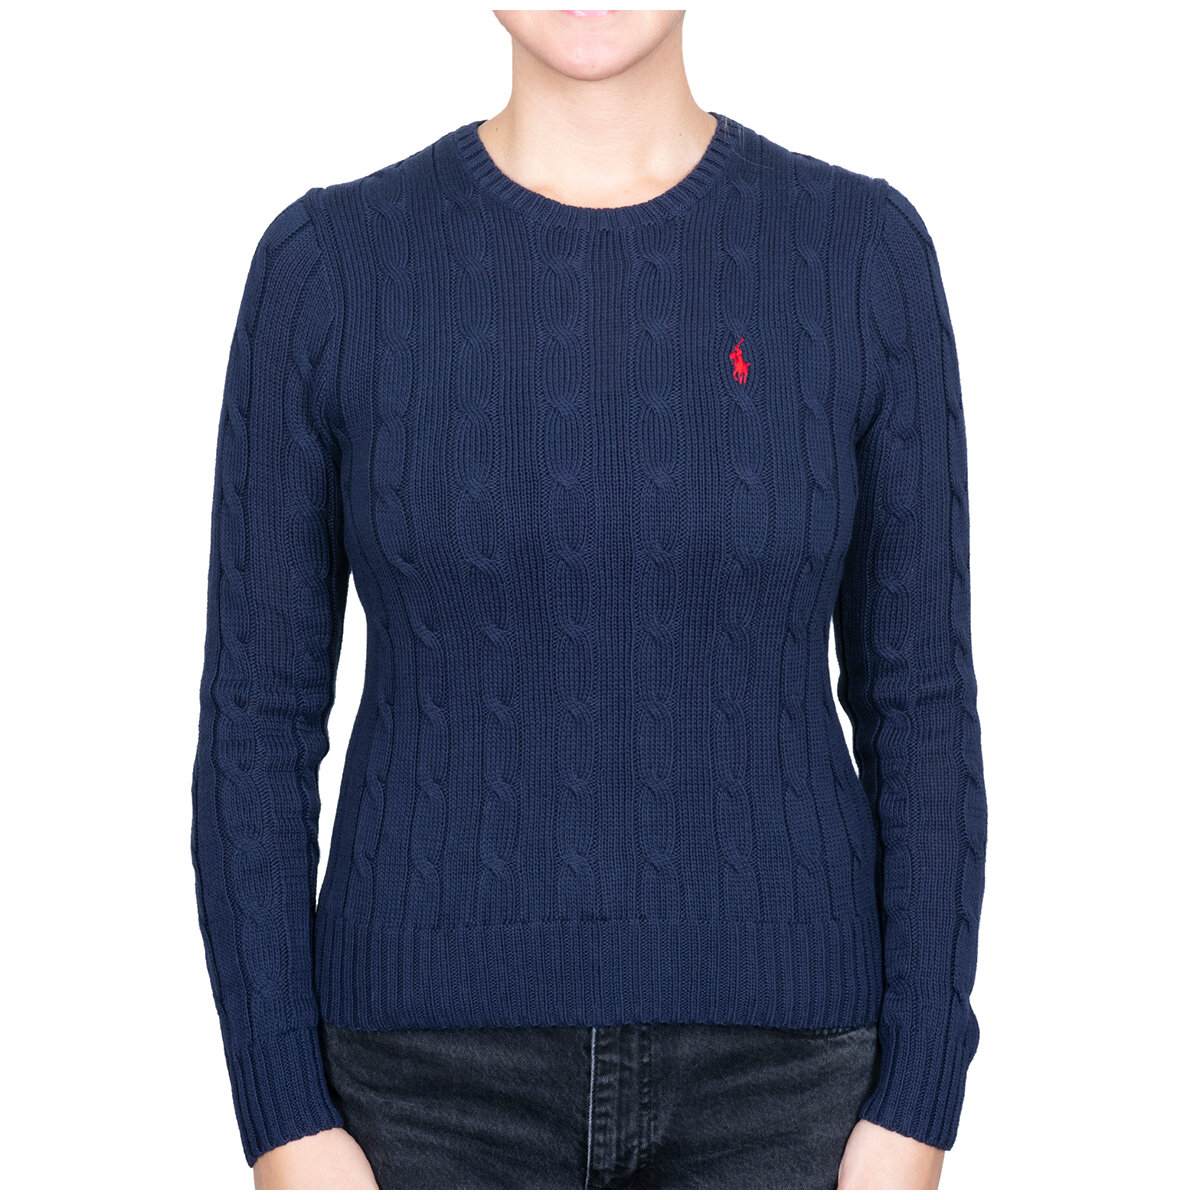 Ralph Lauren Cable Knit Sweater Hunter Navy | Costco Aust...